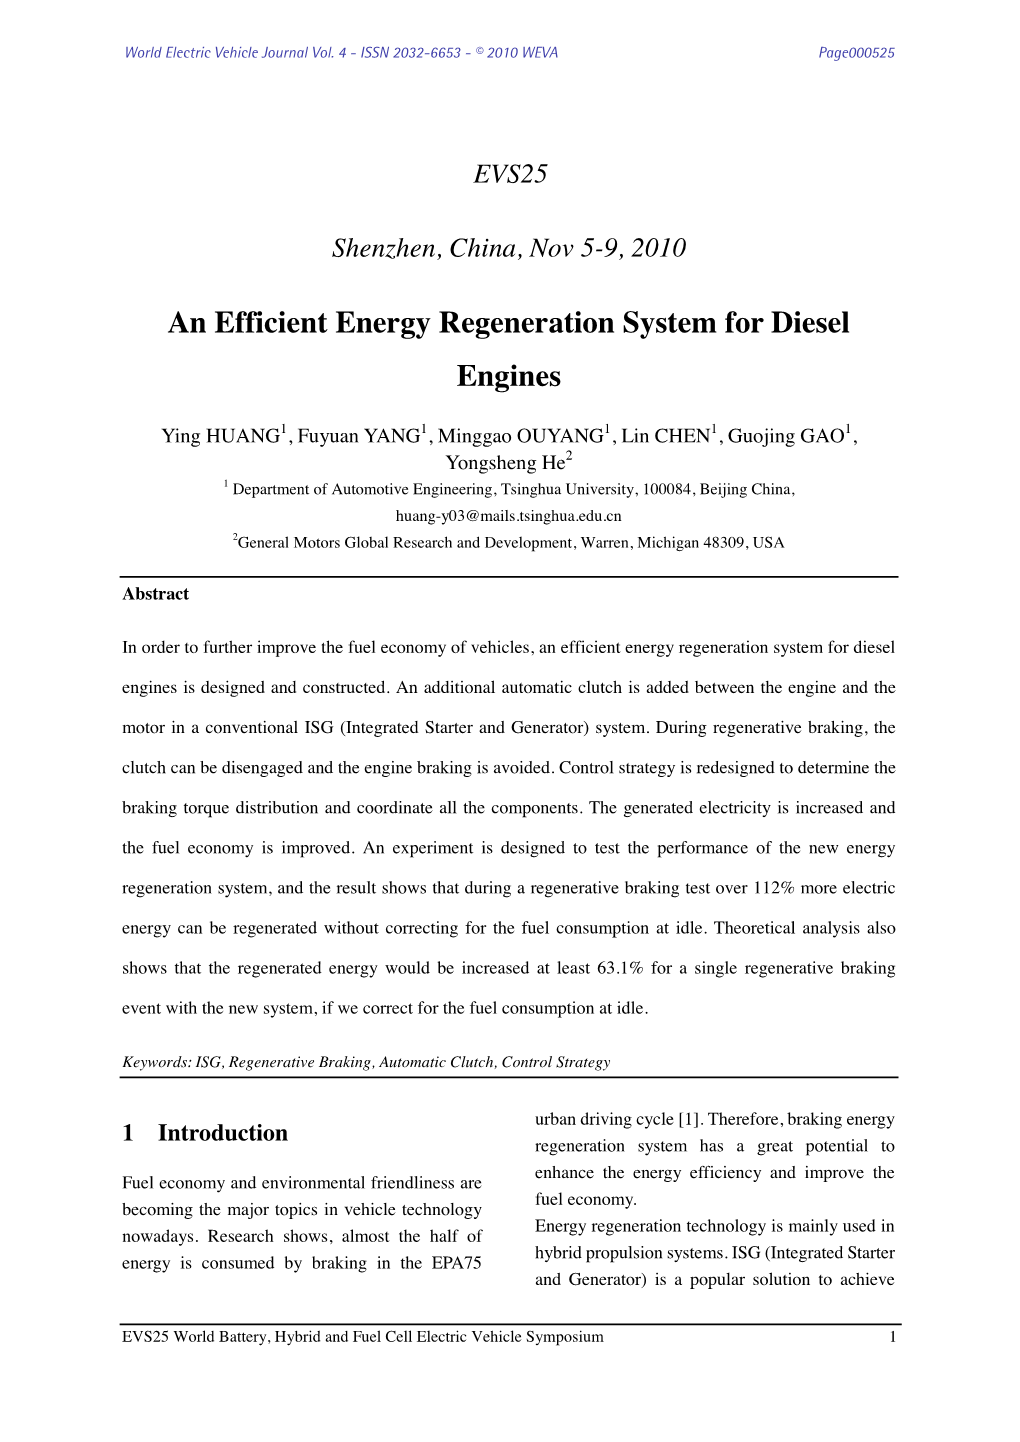 An Efficient Energy Regeneration System for Diesel Engines